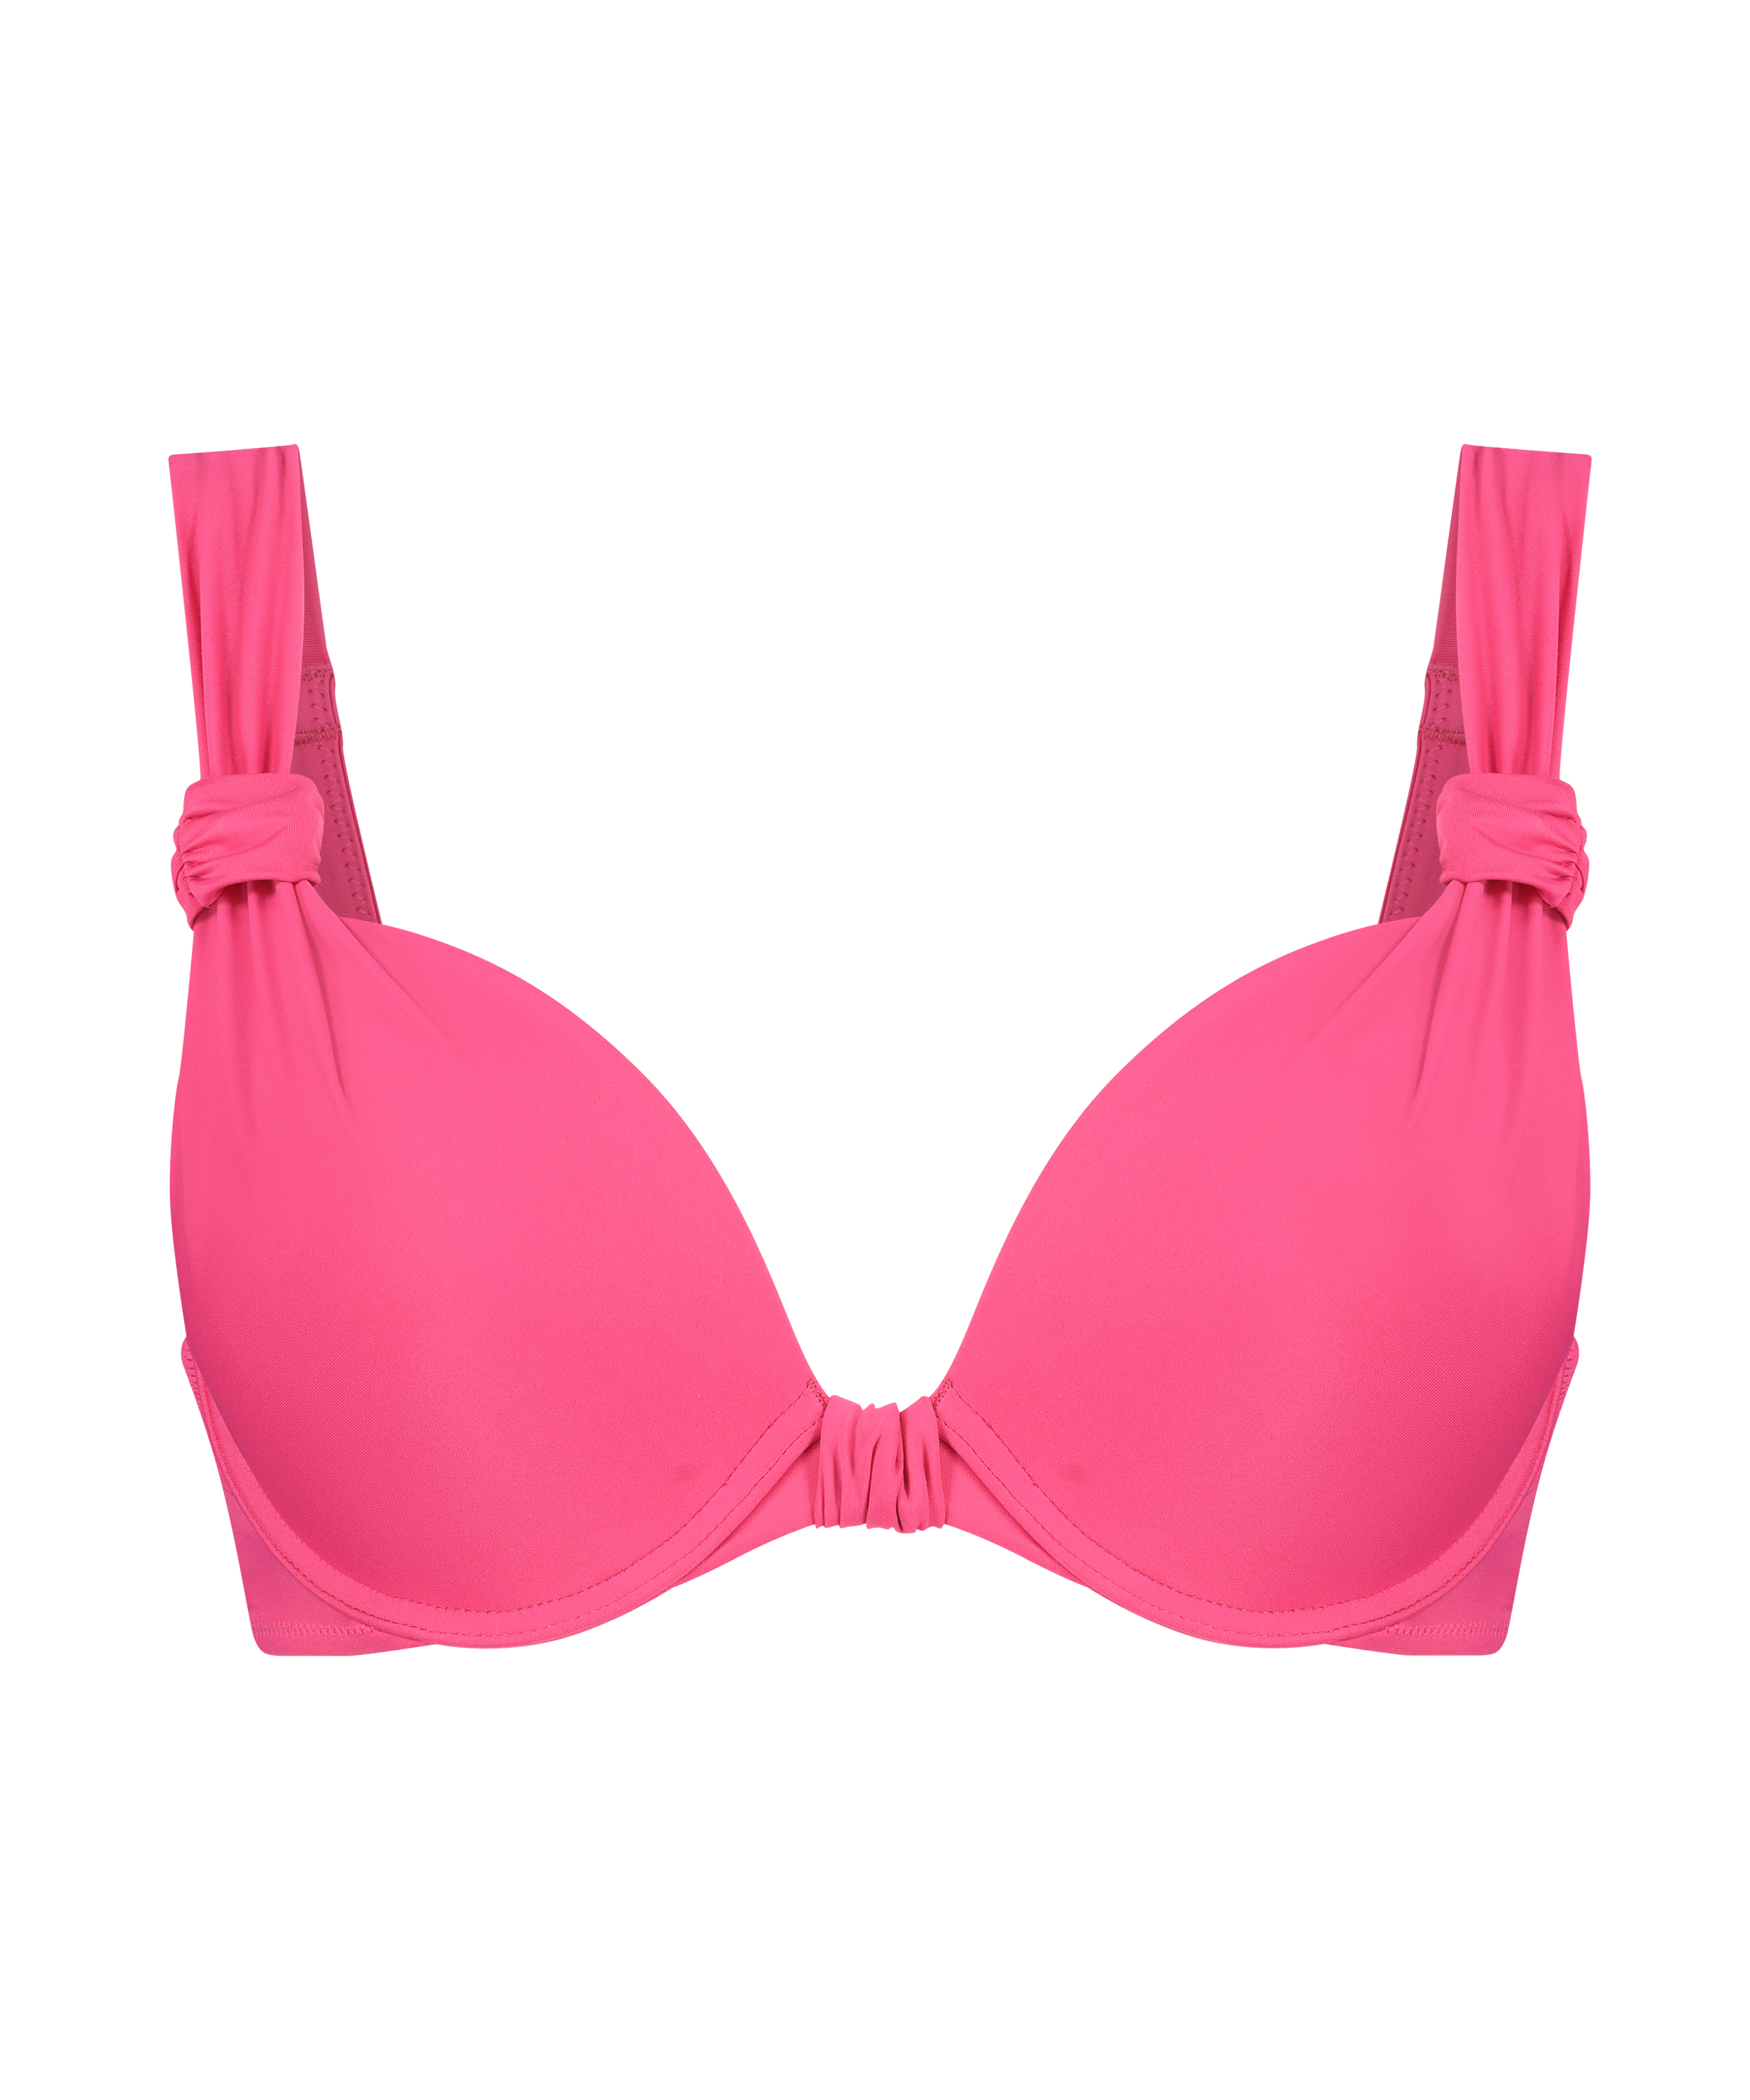 Padded underwired bikini top Luxe Cup E +, Pink, main